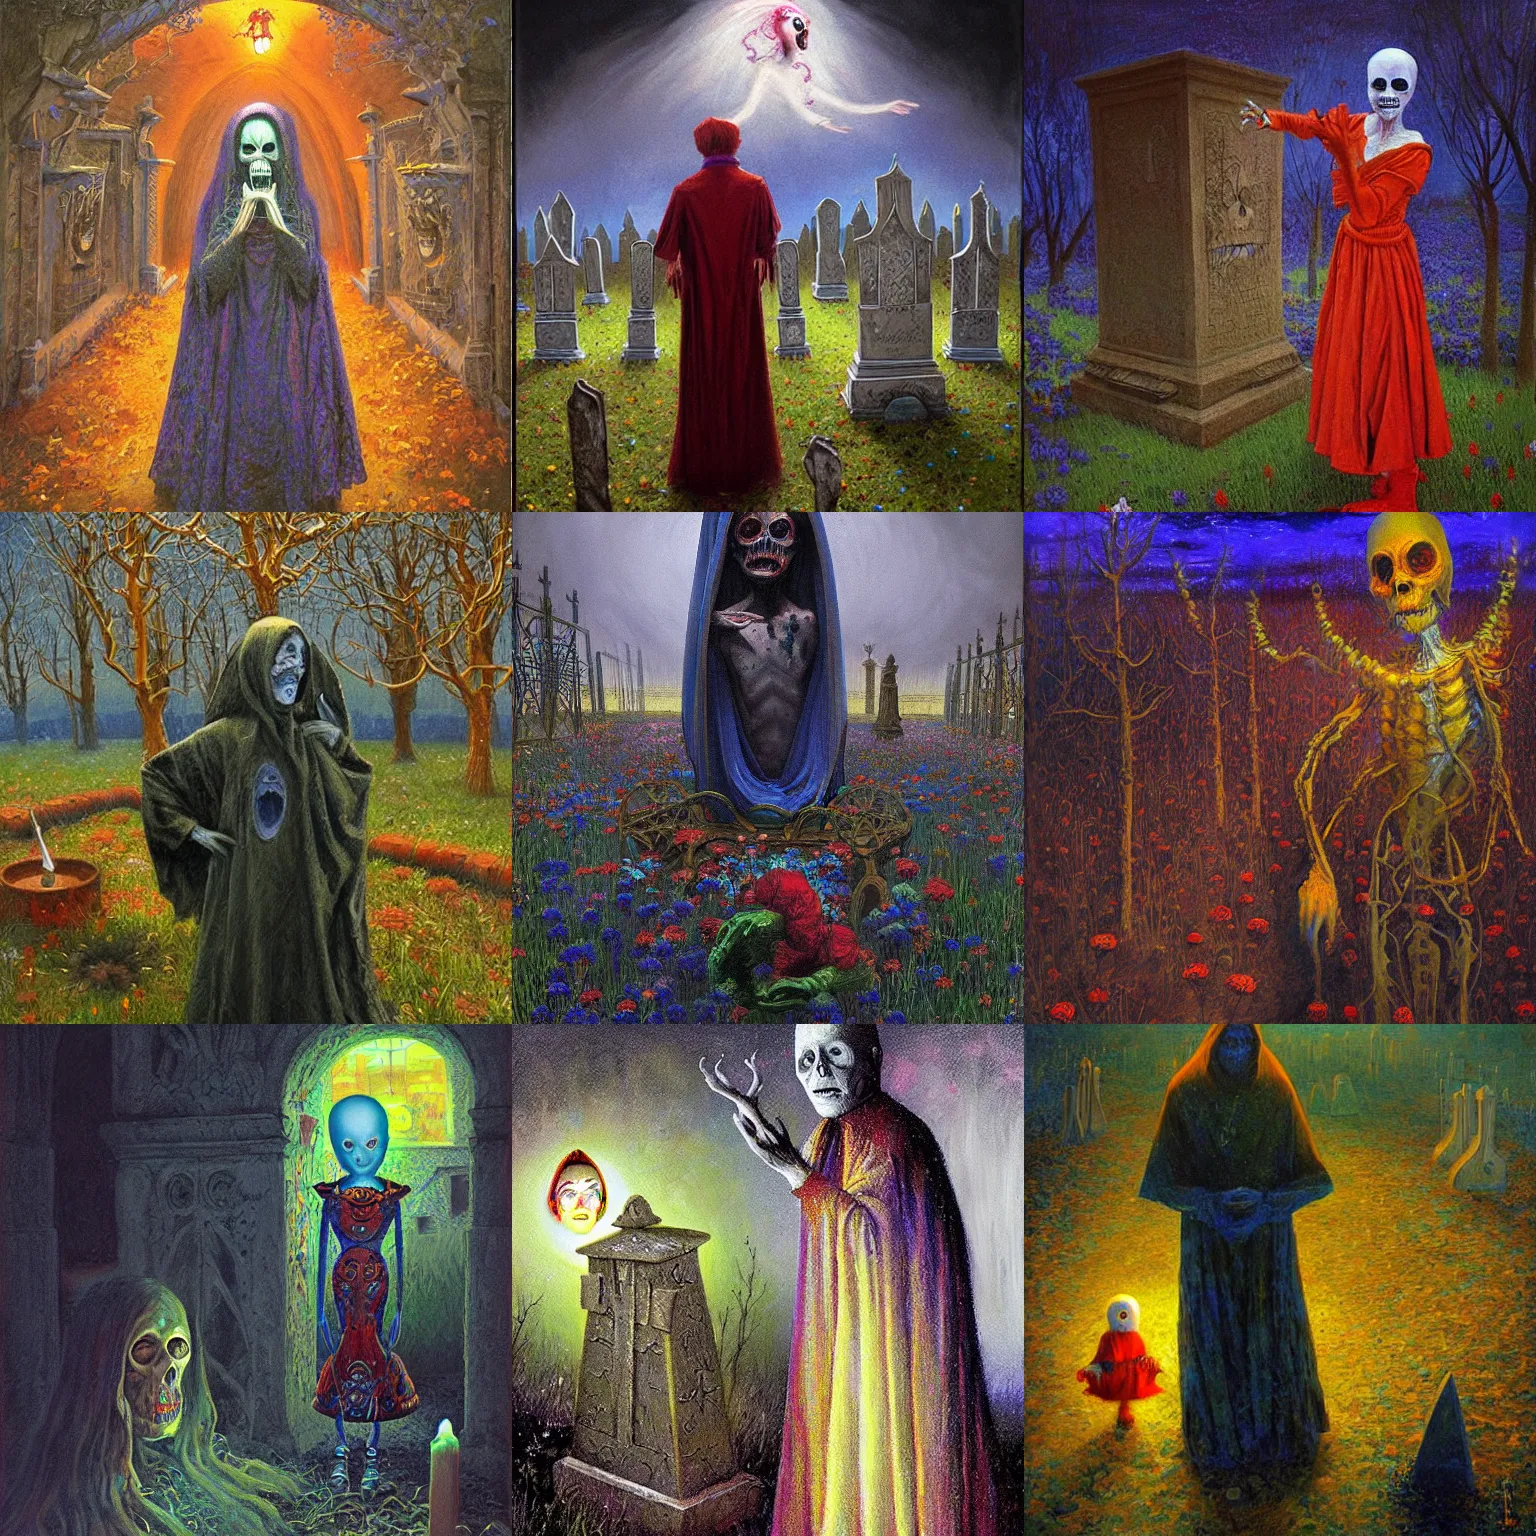 Prompt: nizovtsev victor painting of a creepy ghost in a menacing graveyard